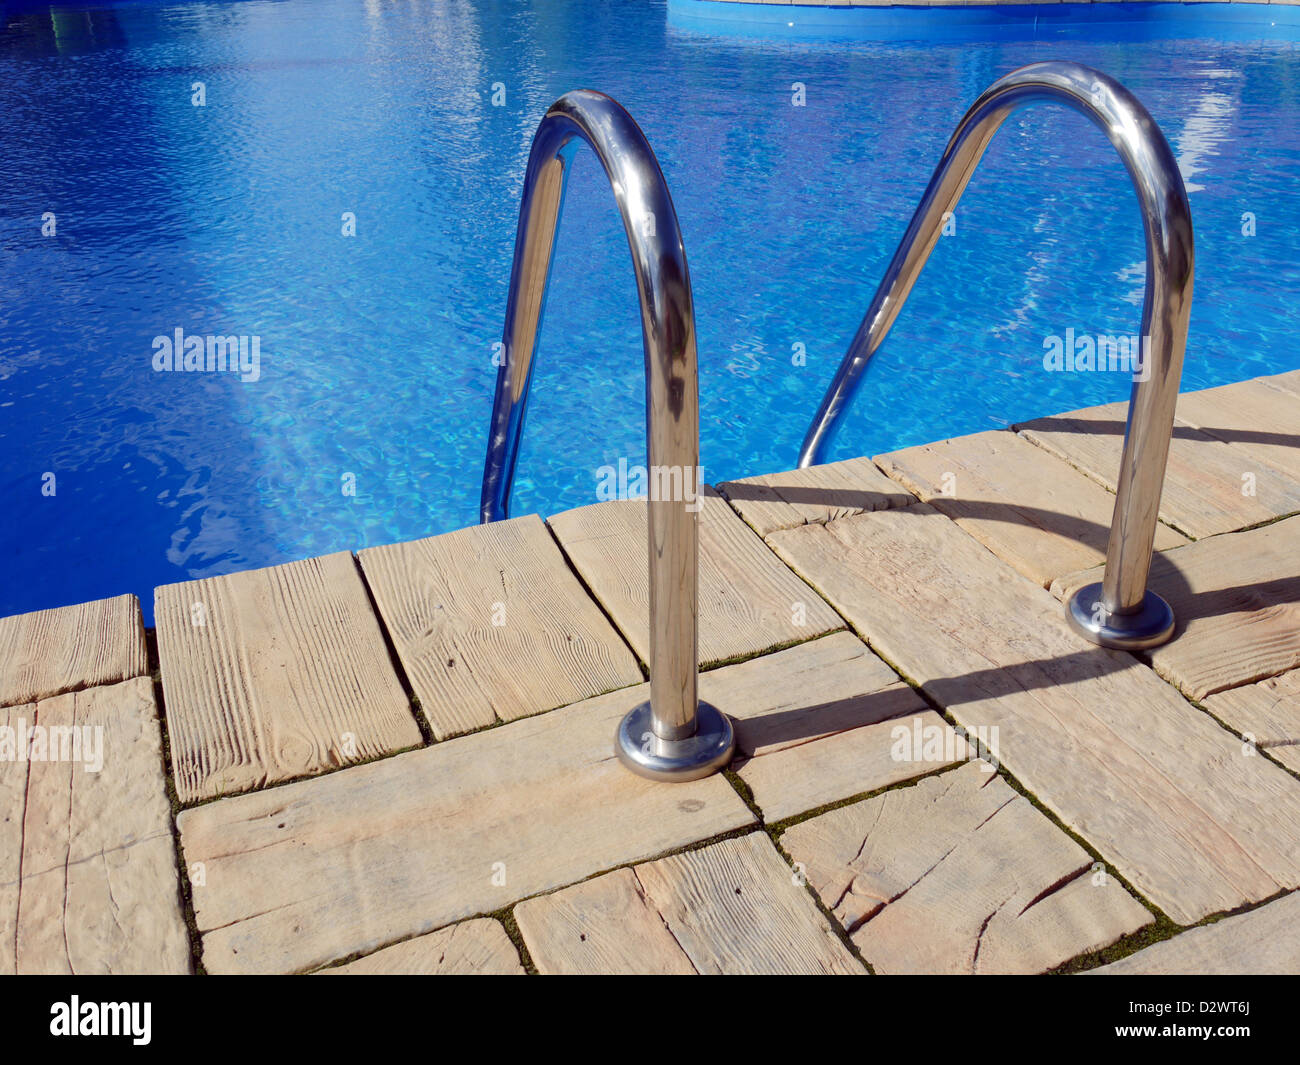 Swimming pool edge with steel handle bars Stock Photo